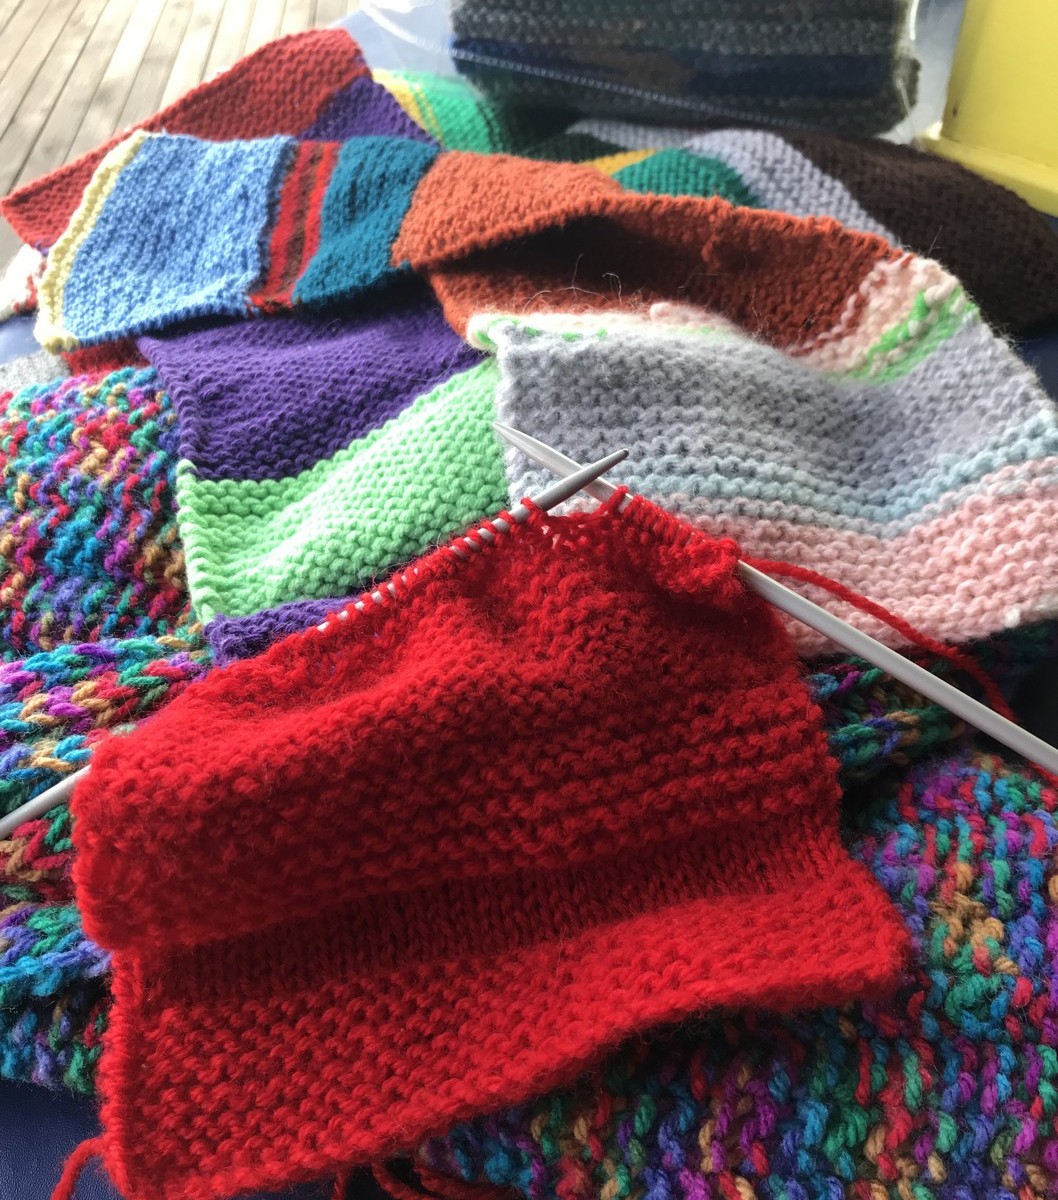 Community knitting basket – One Family, One Planet